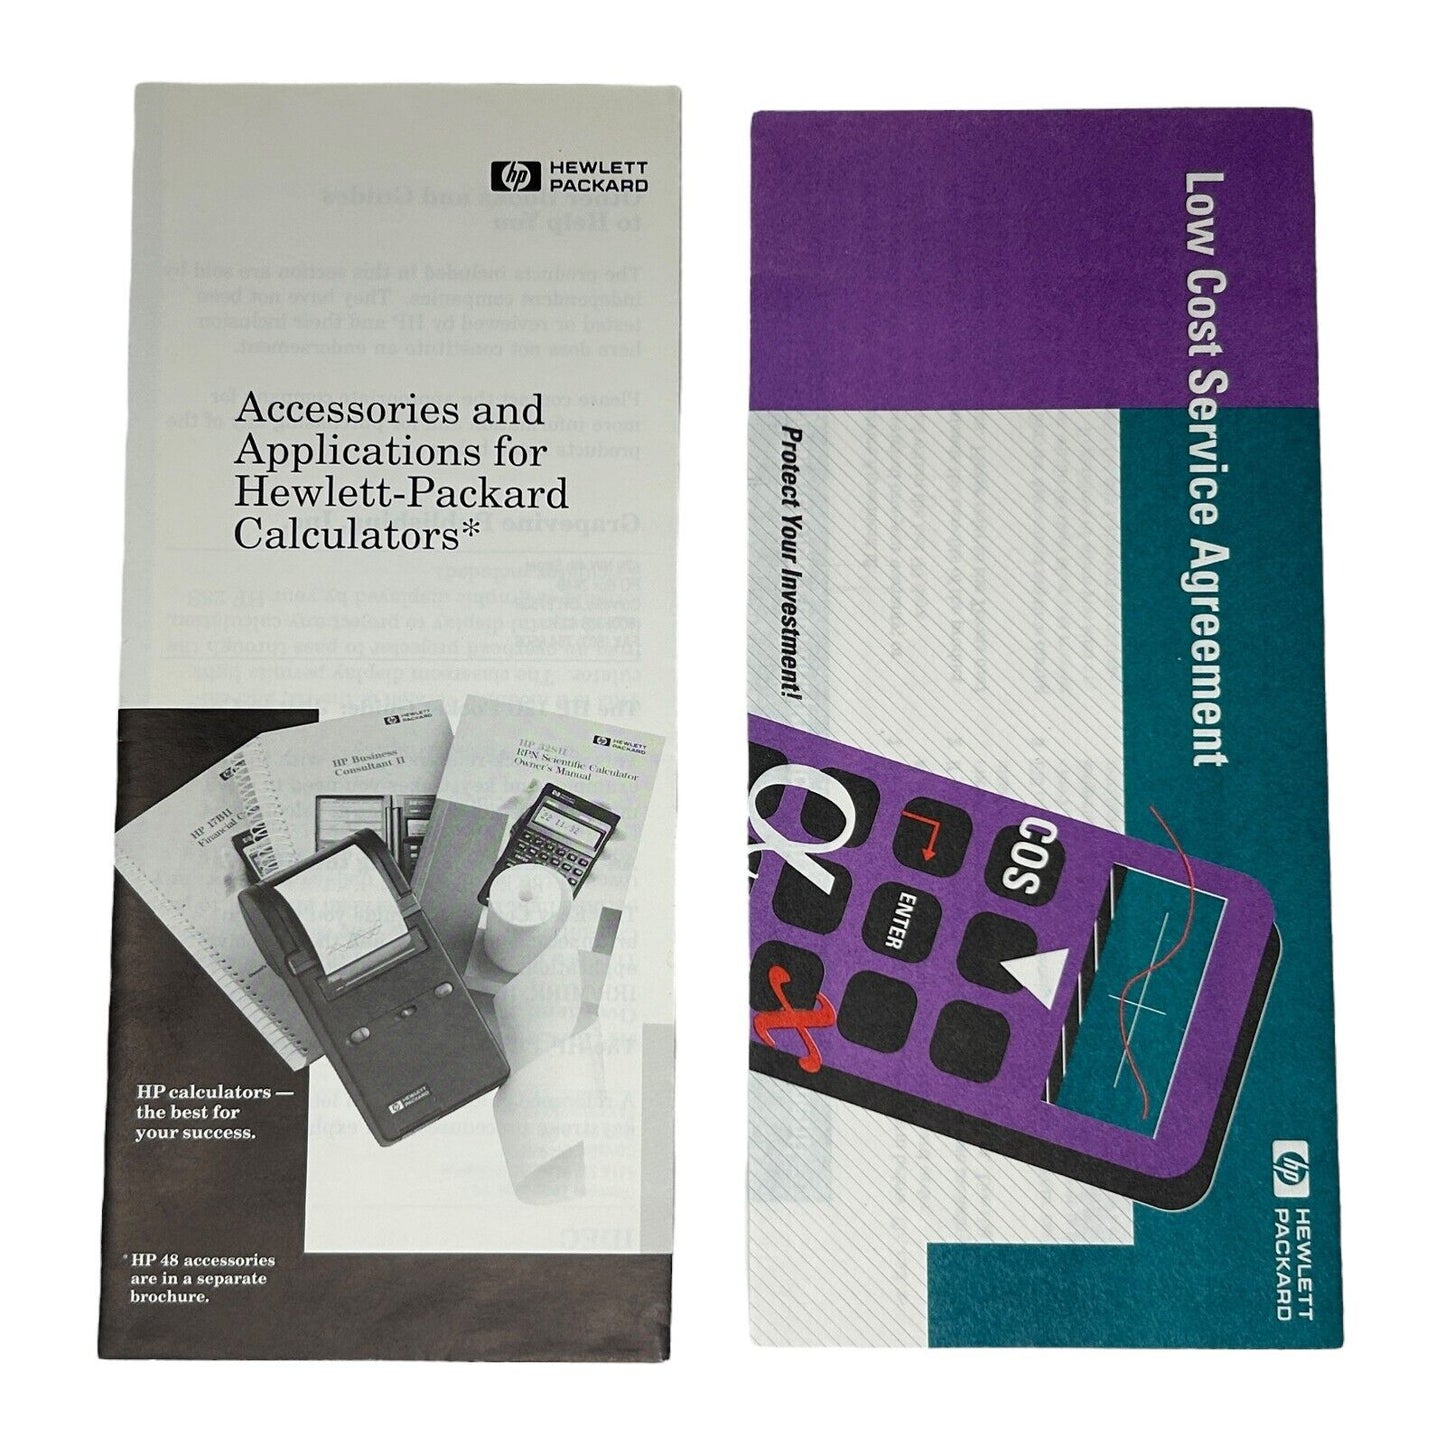 Hewlett Packard HP 17BII Financial Calculator Vintage 90s Complete Manual Case